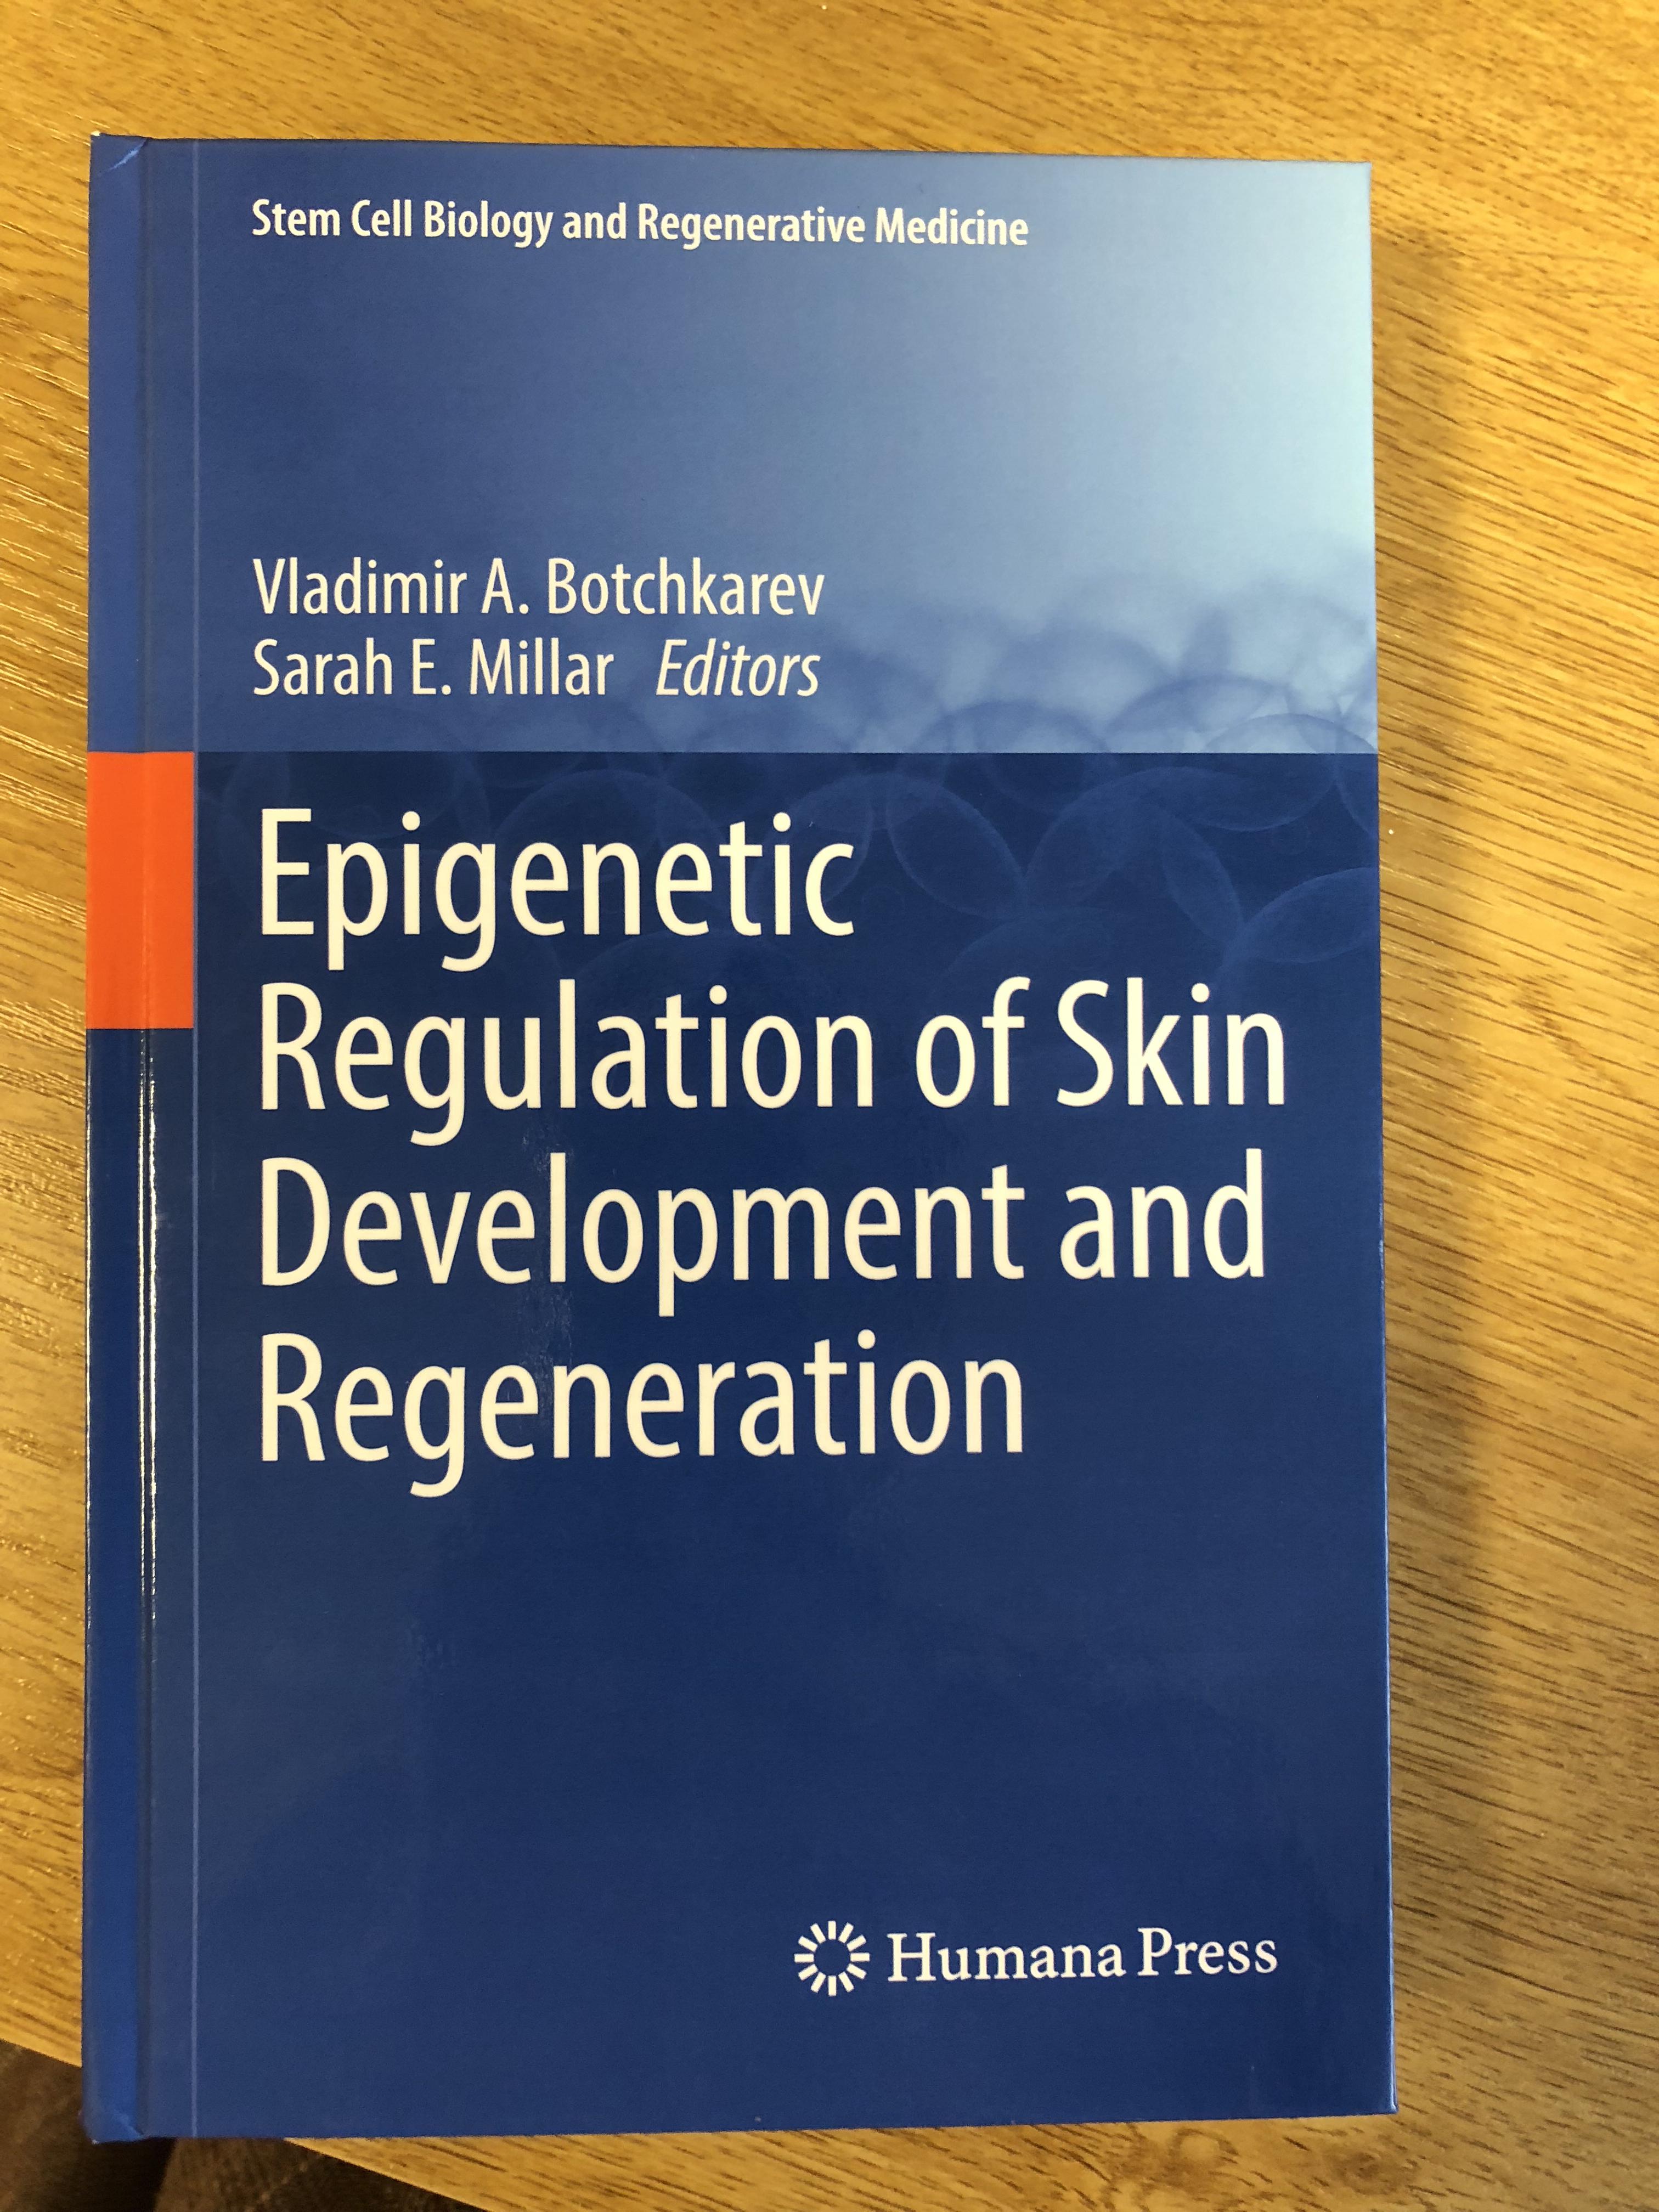 Front cover of Epigenetic regulation of skin development and regeneration by Vladamir A. Botchkarev